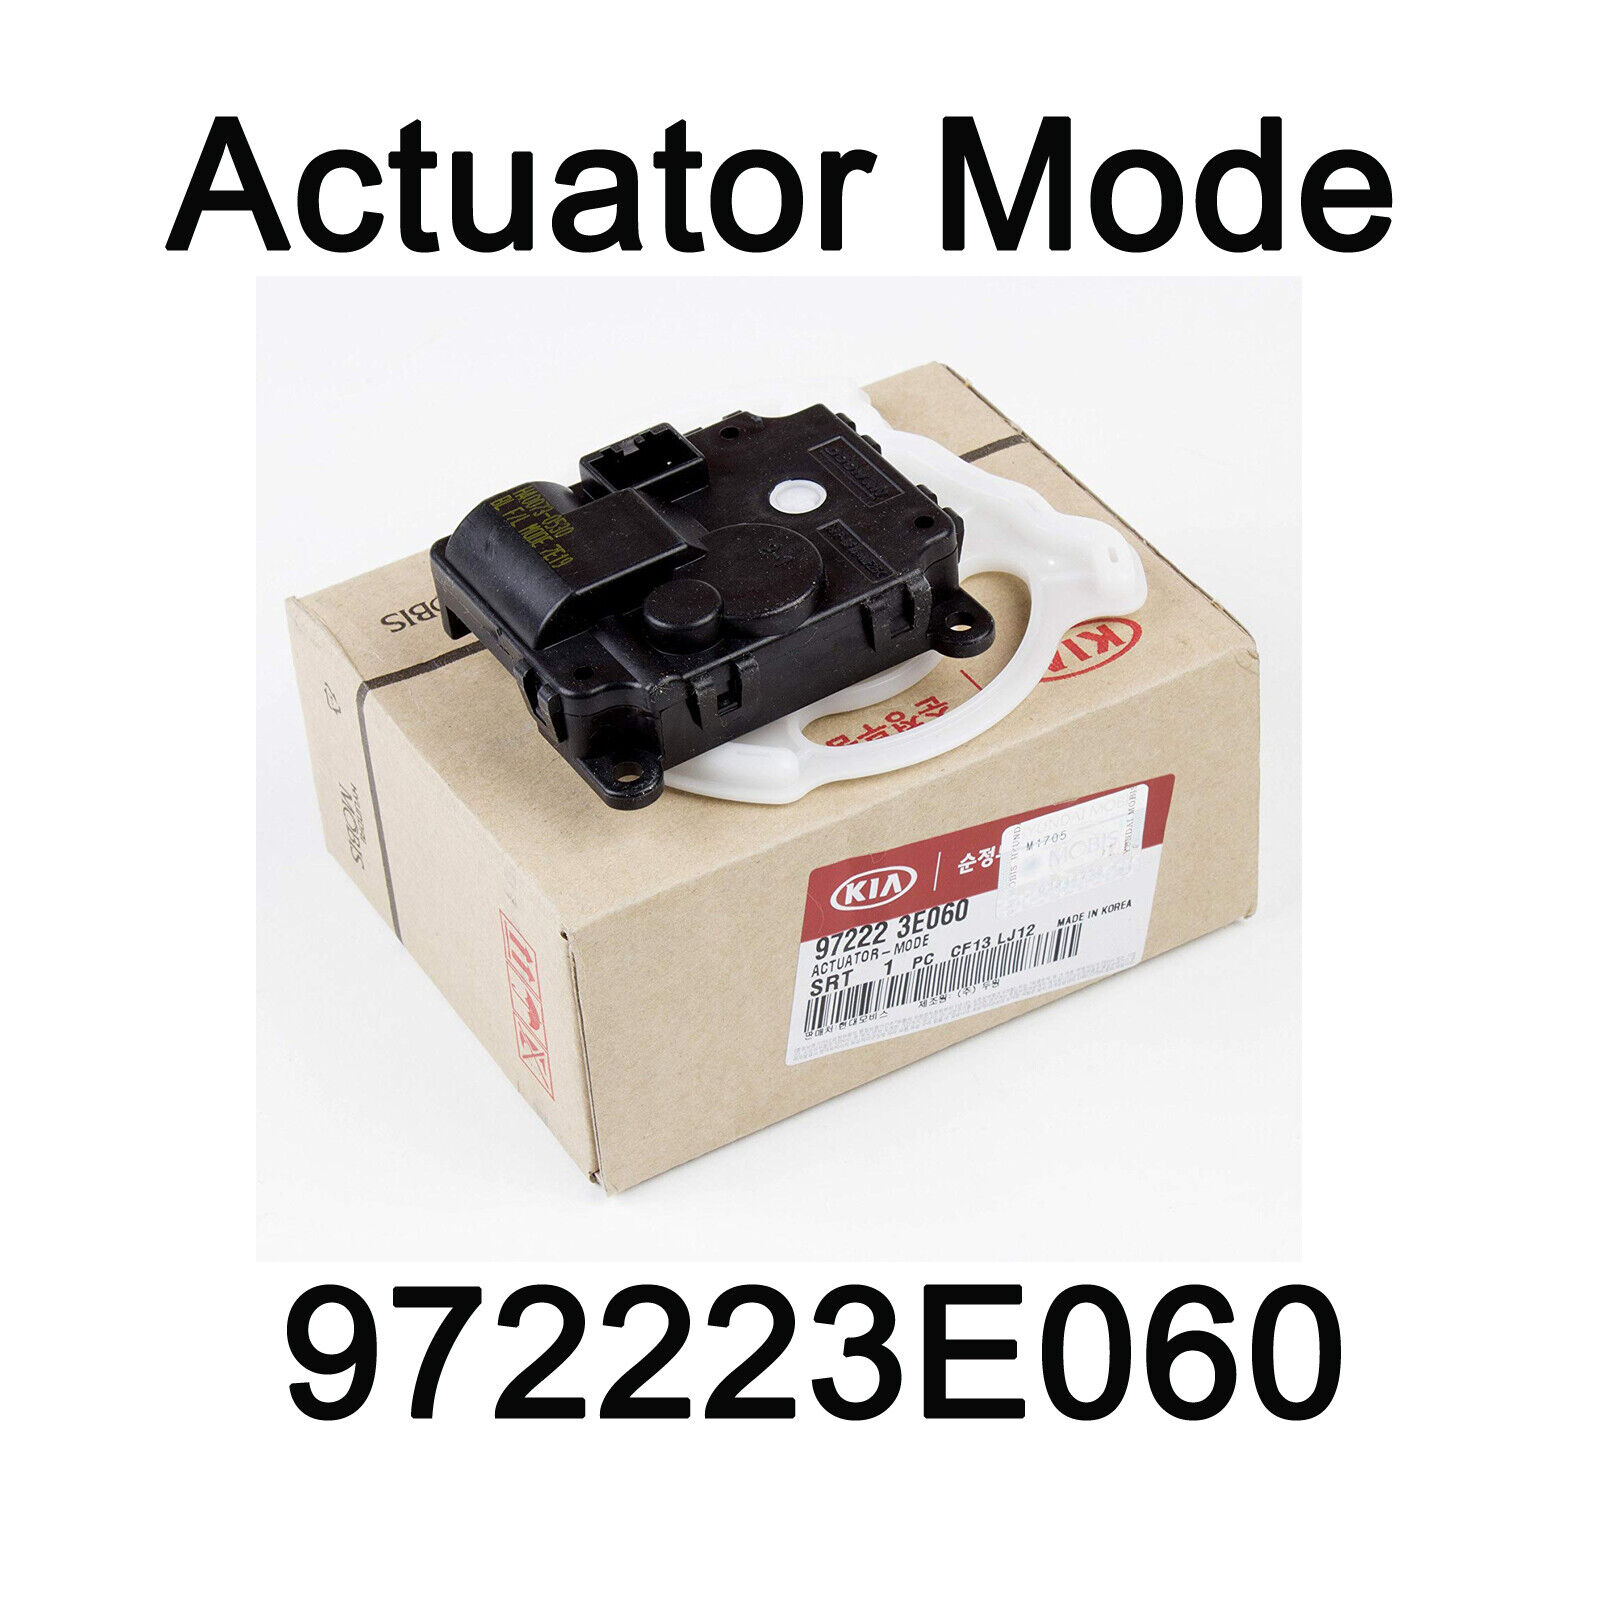 New Actuator Mode Oem 972223E060 For KIA Sorento 06-09 Borrego Mohave